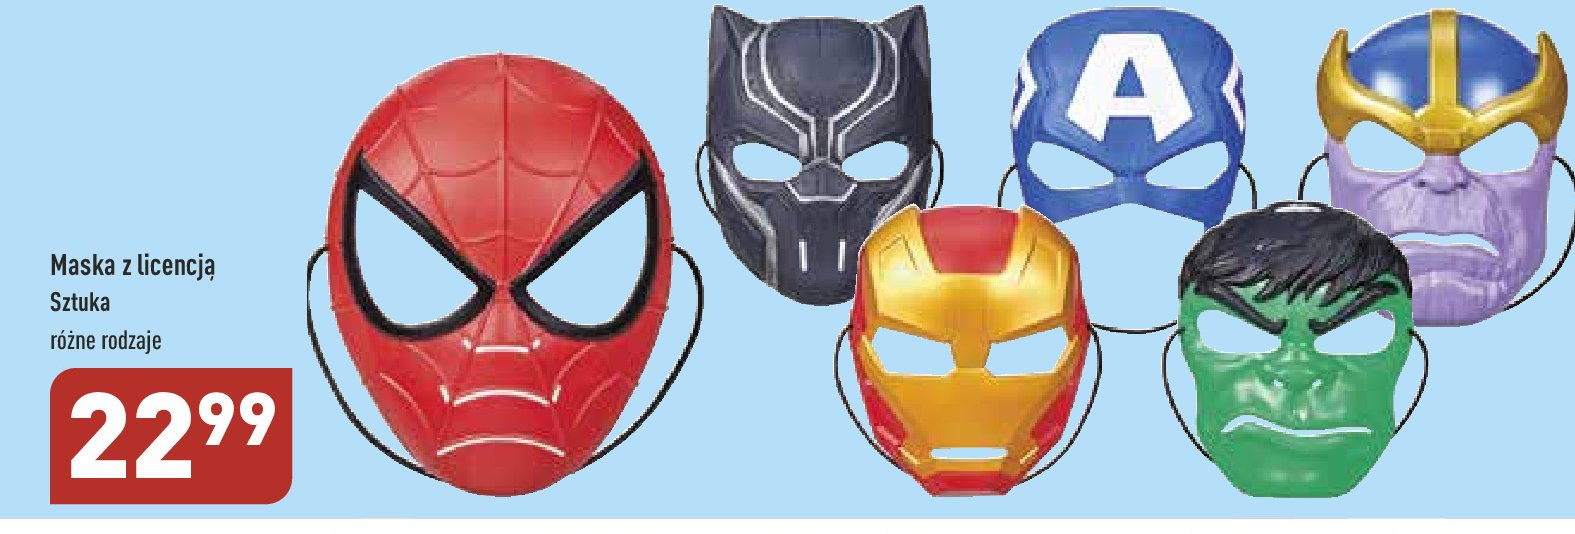 Maska spiderman promocja